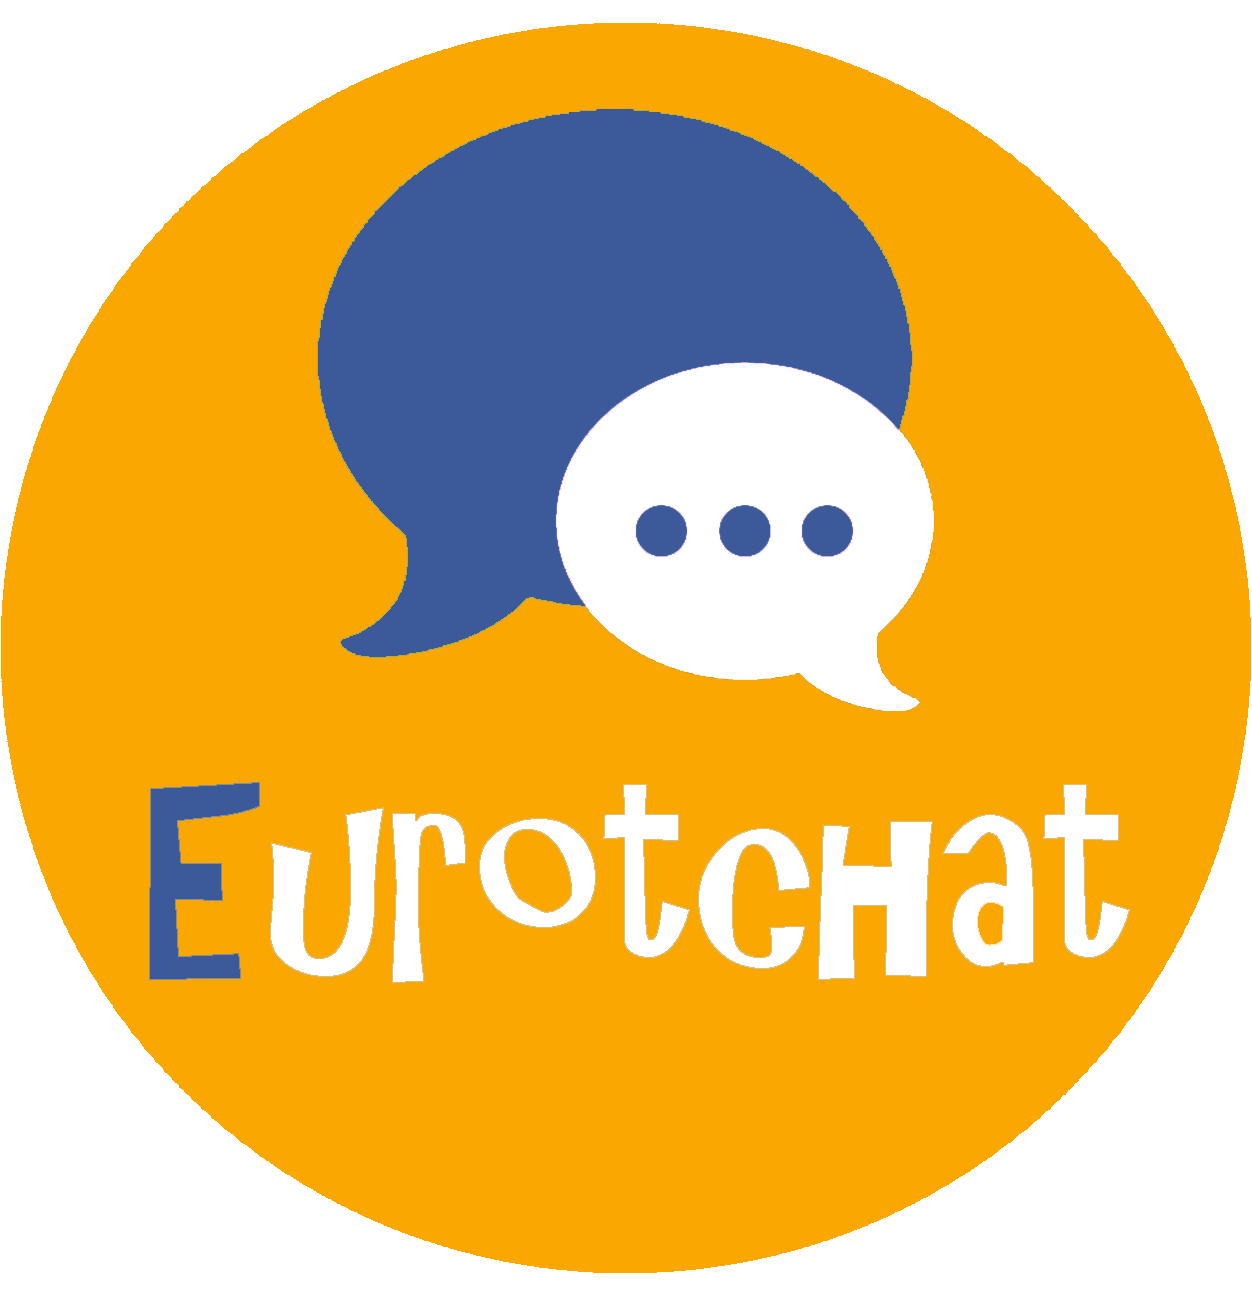 EuroTchat